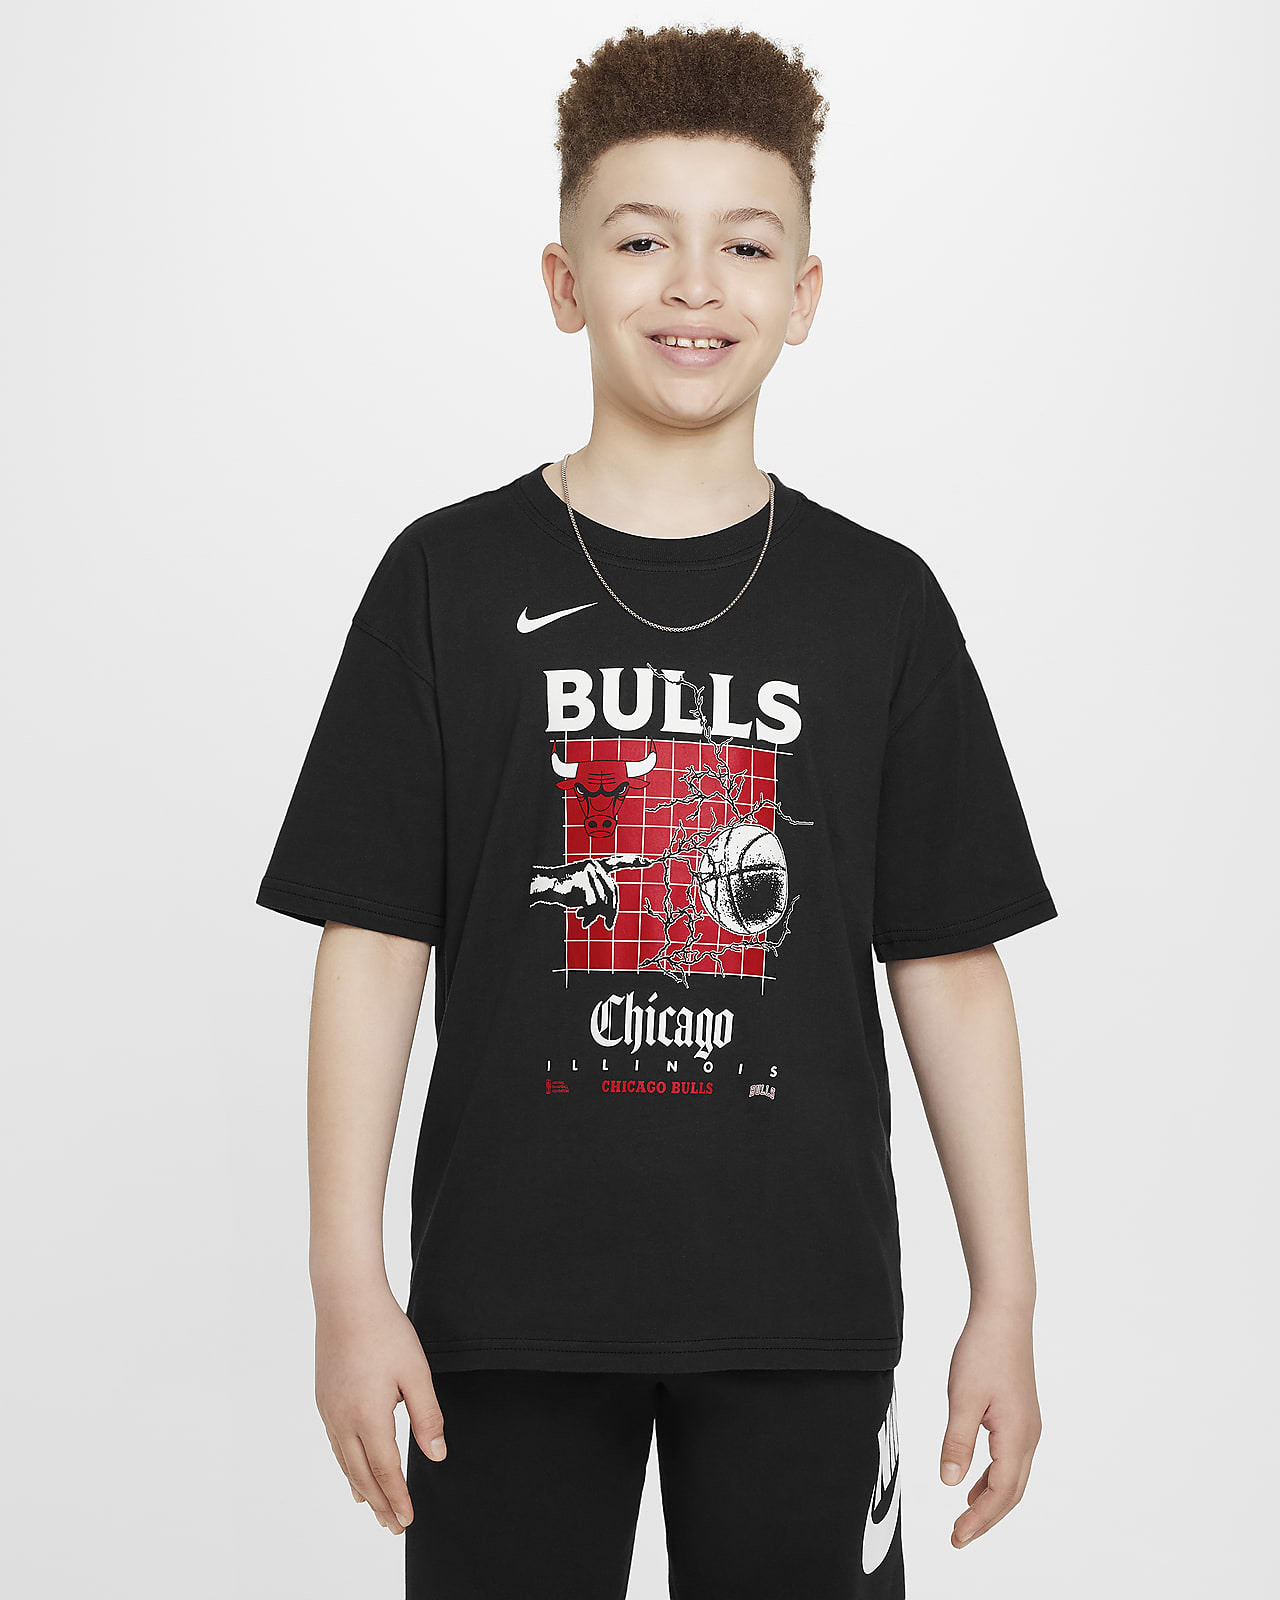 Chicago Bulls Courtside Camiseta Max90 Nike de la NBA - Niño